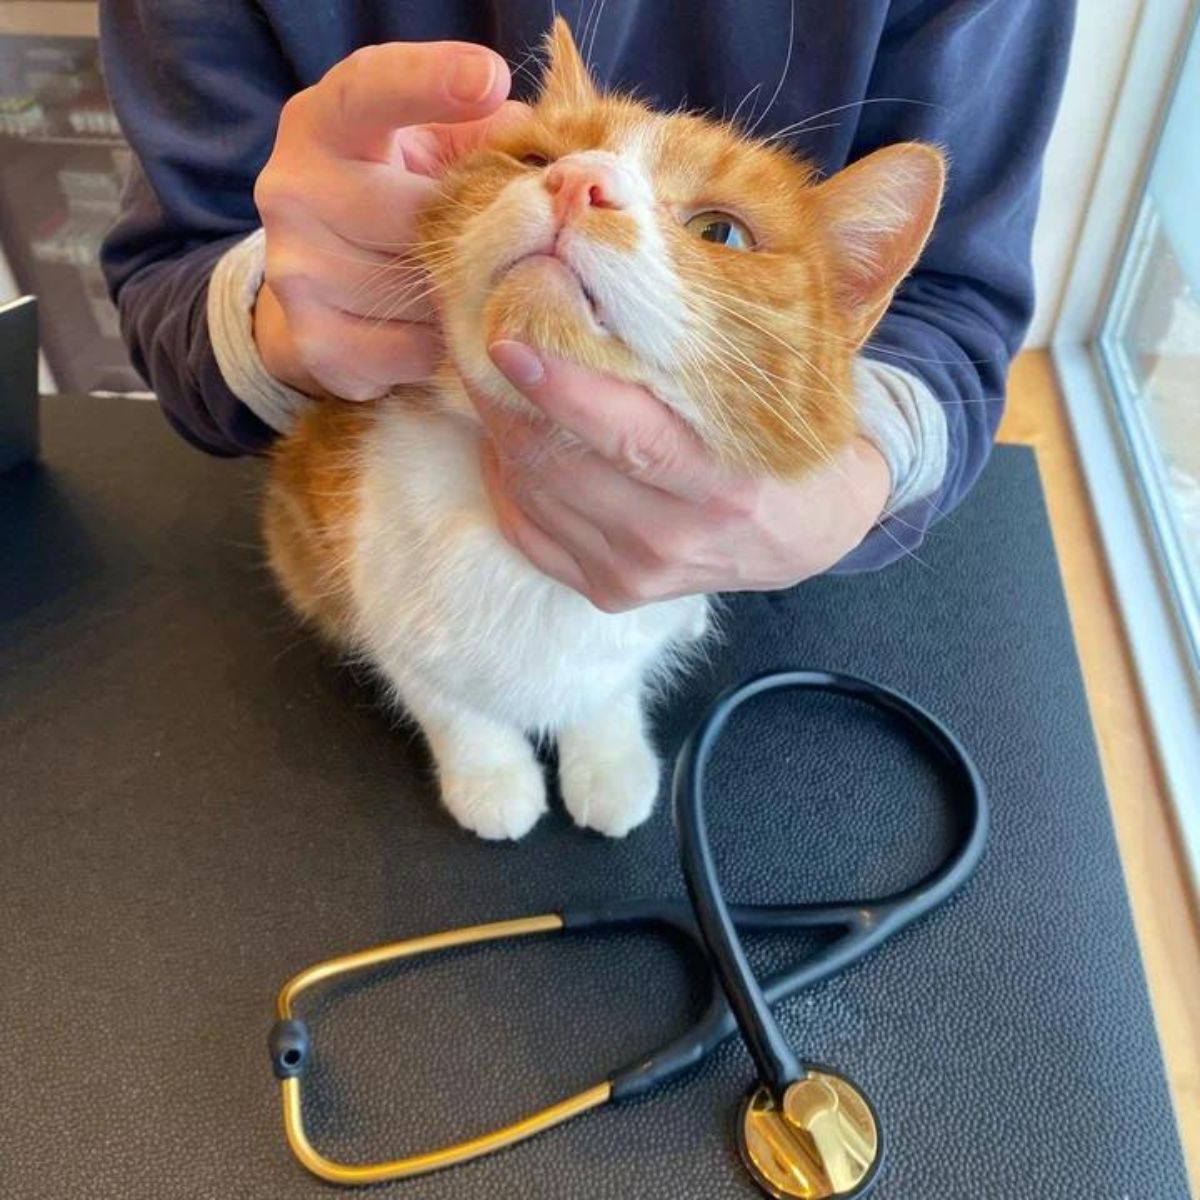 vet examining the cat